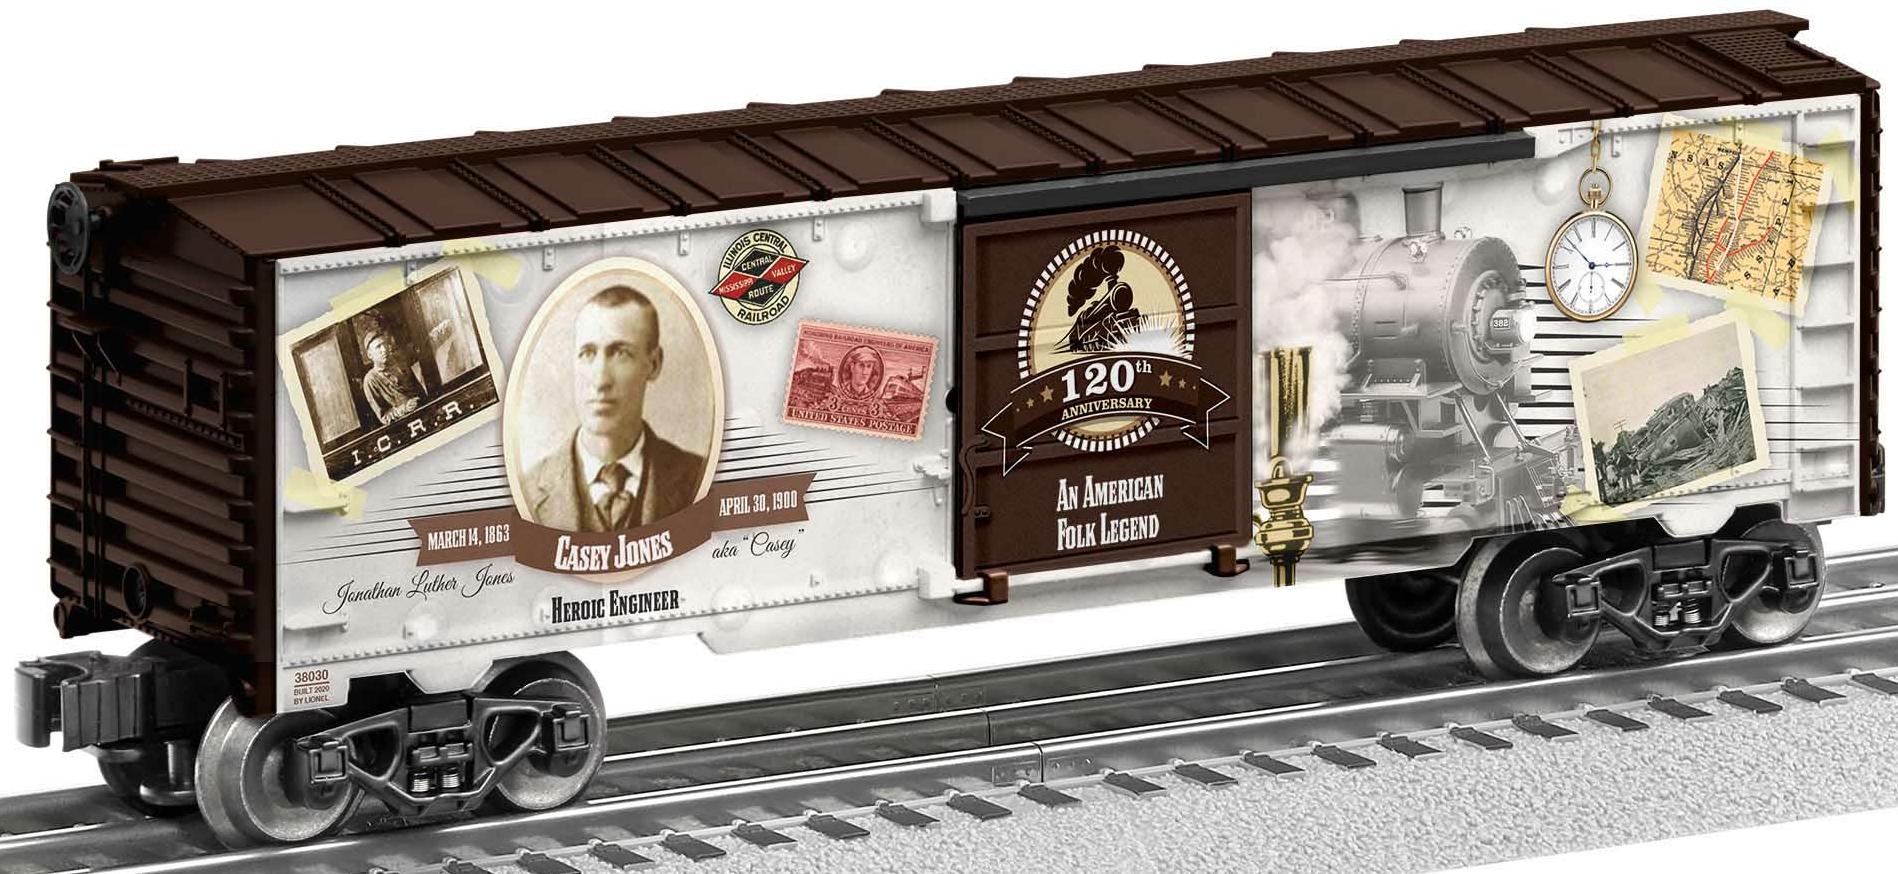 Casey Jones 120th Anniversary Boxcar image